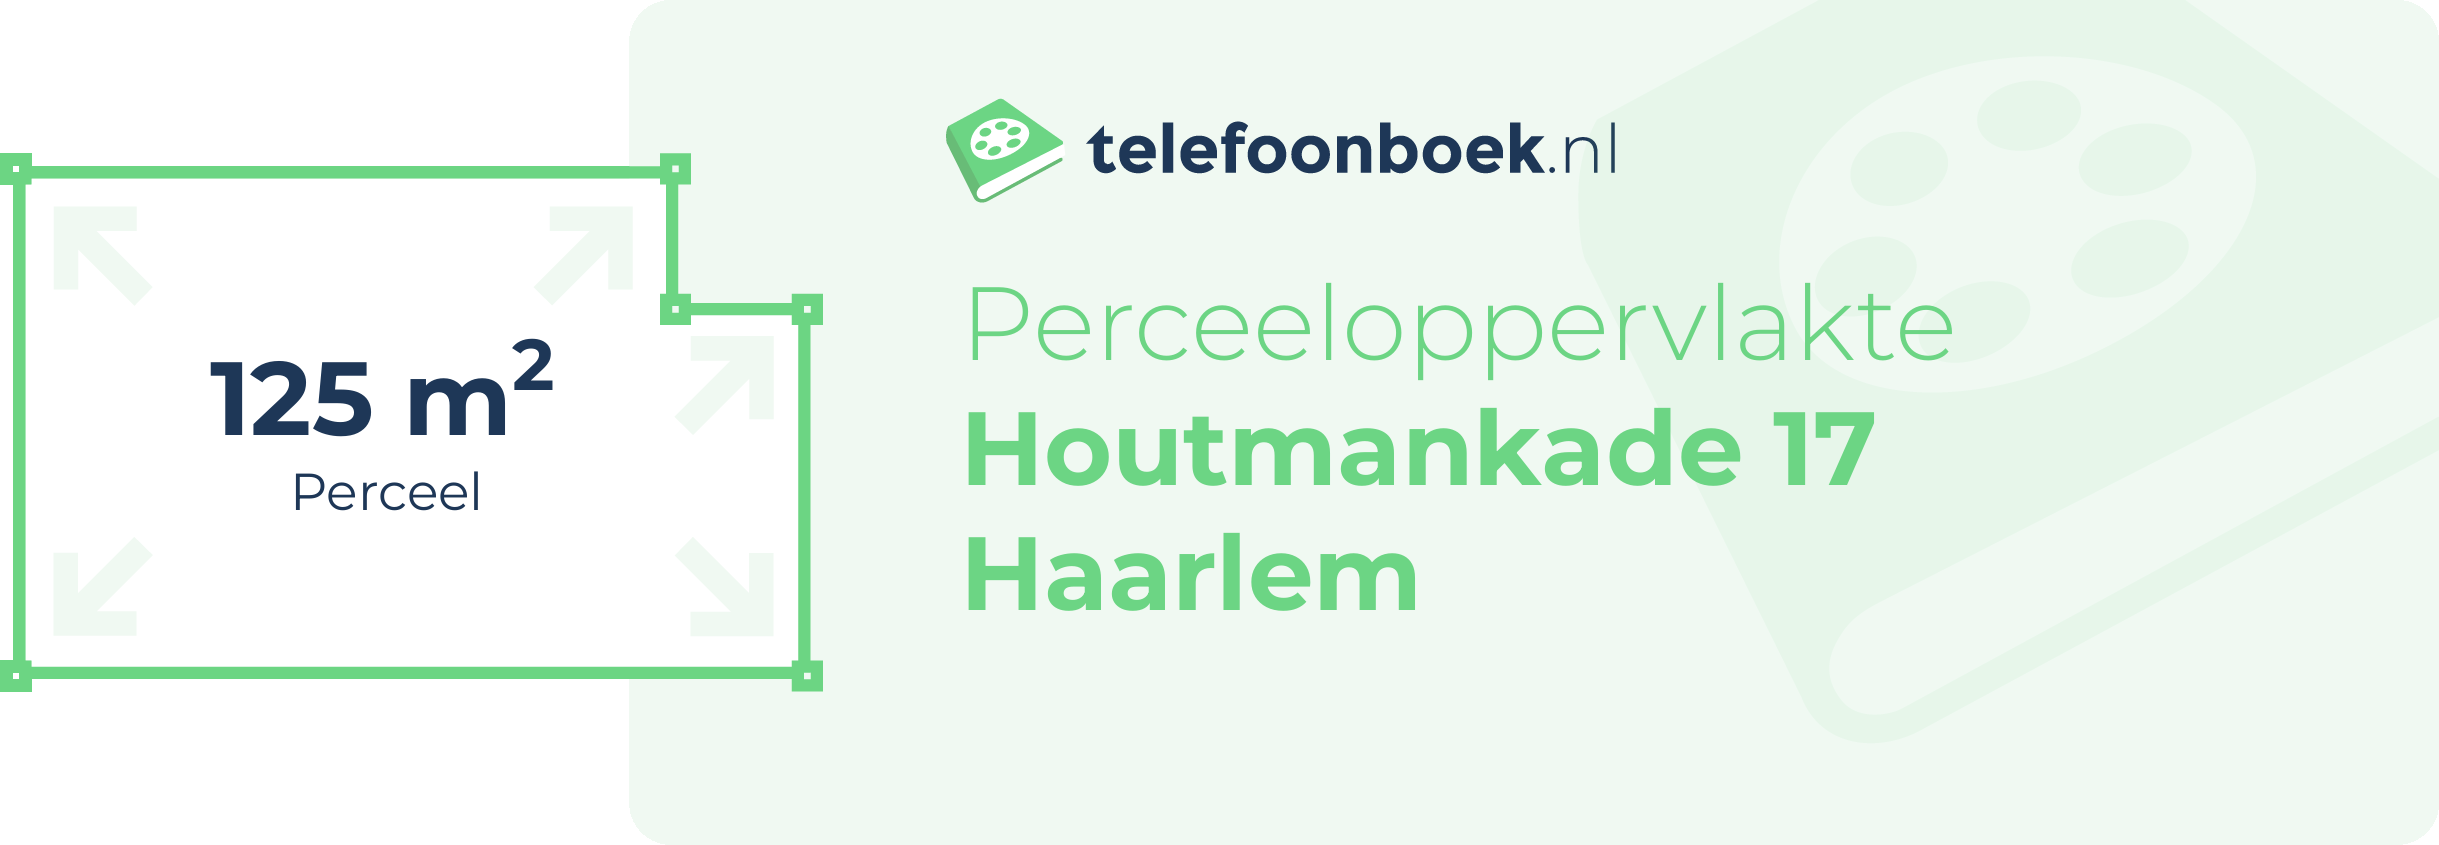 Perceeloppervlakte Houtmankade 17 Haarlem